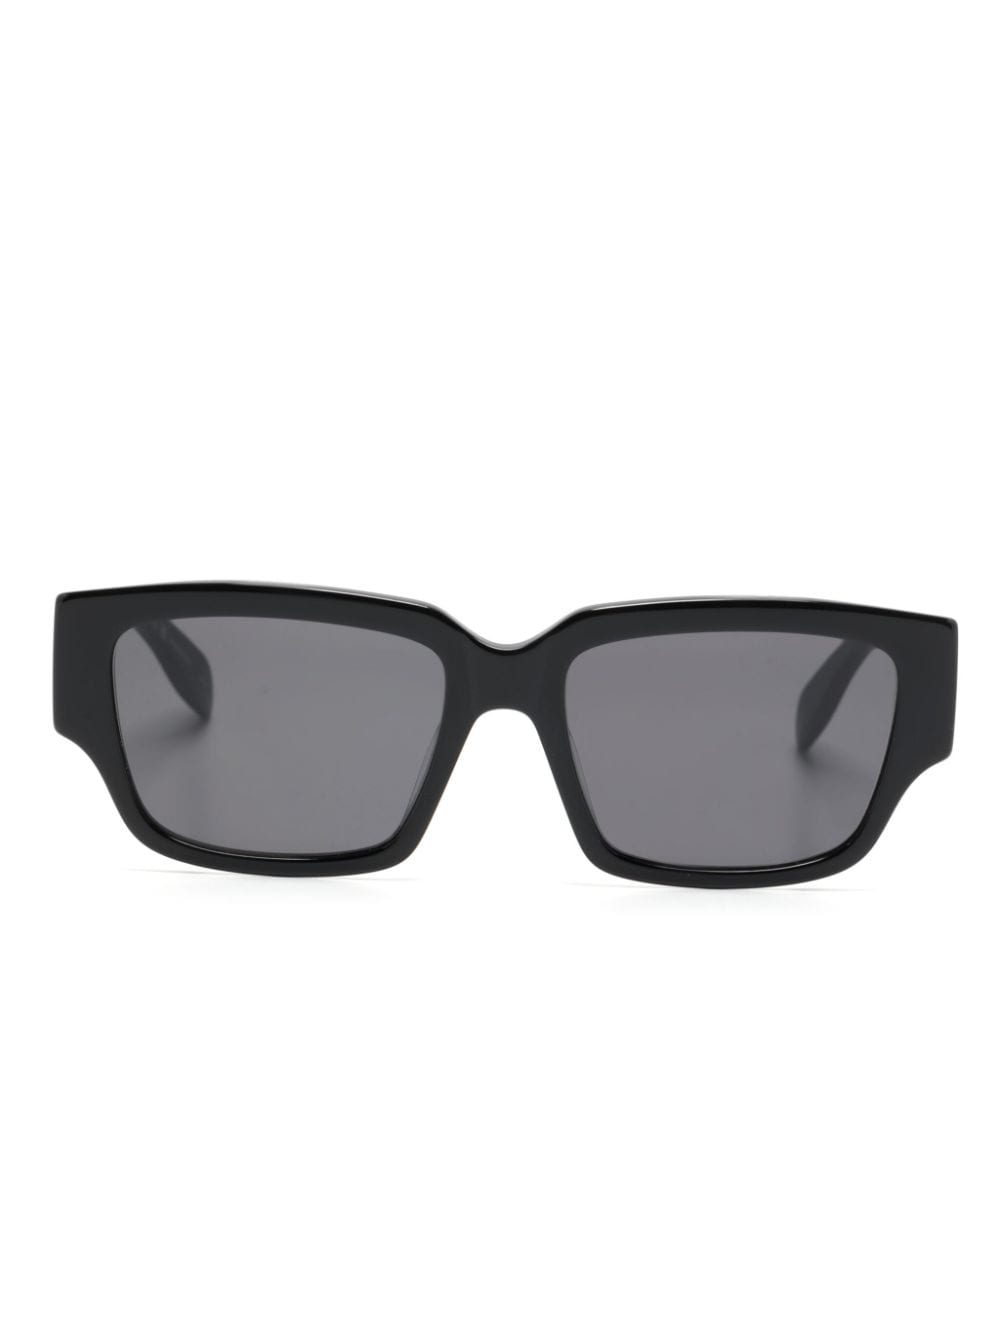 Grafitti-print rectangle-shape sunglasses<BR/><BR/><BR/>